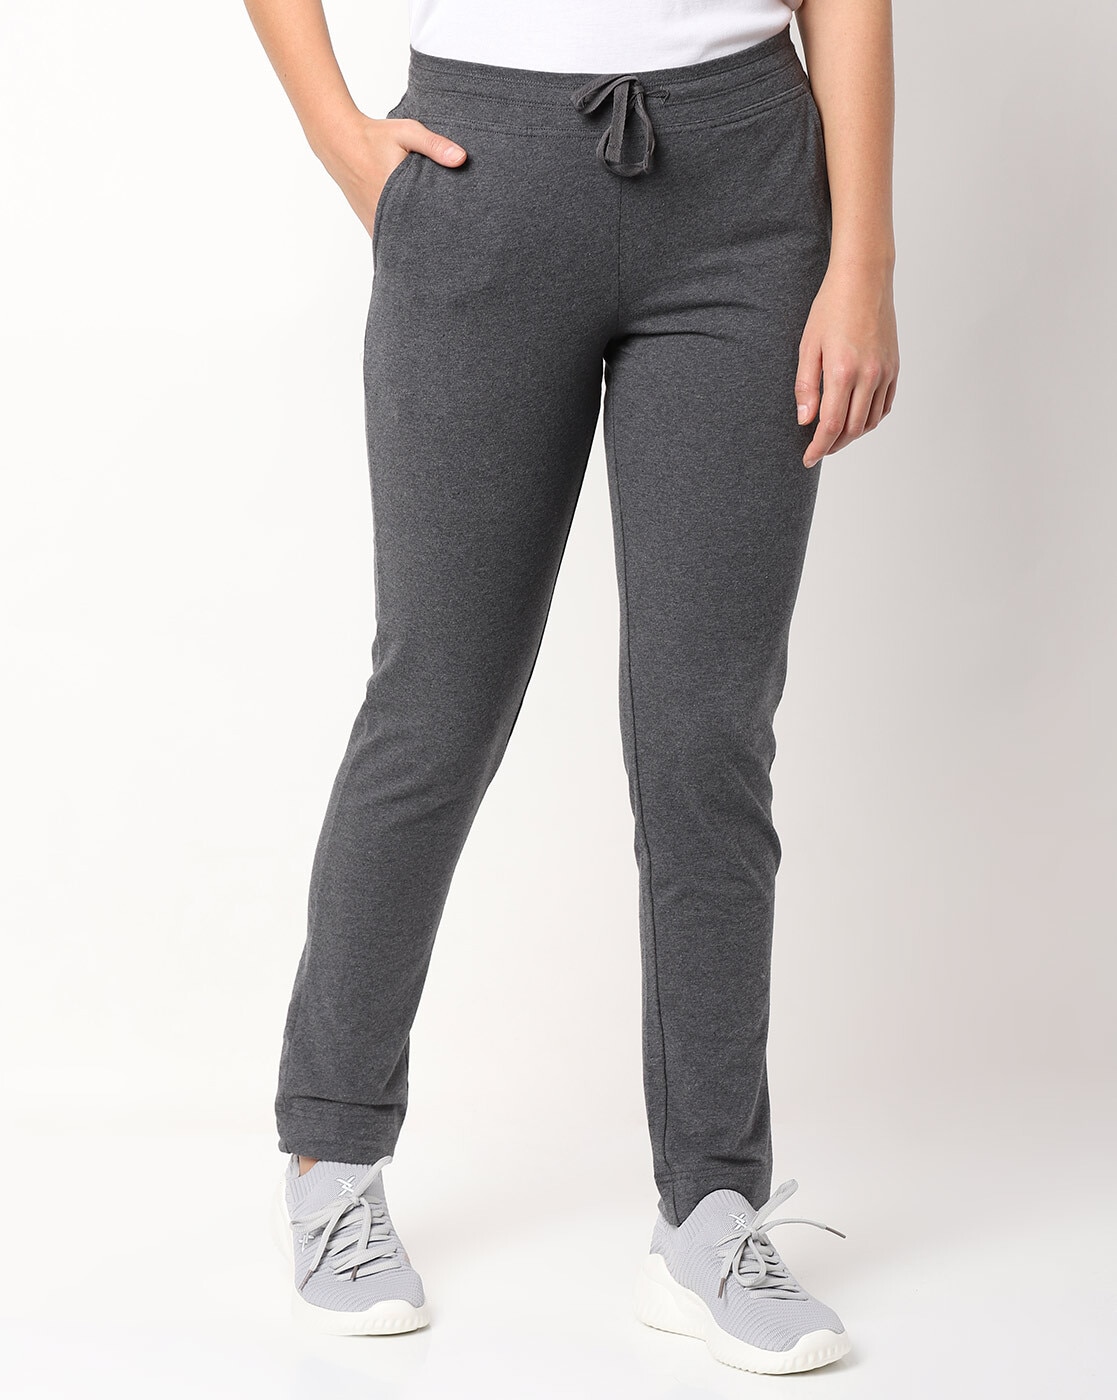 Buy Jockey Stretch Capri Pants - Grey at Rs.849 online